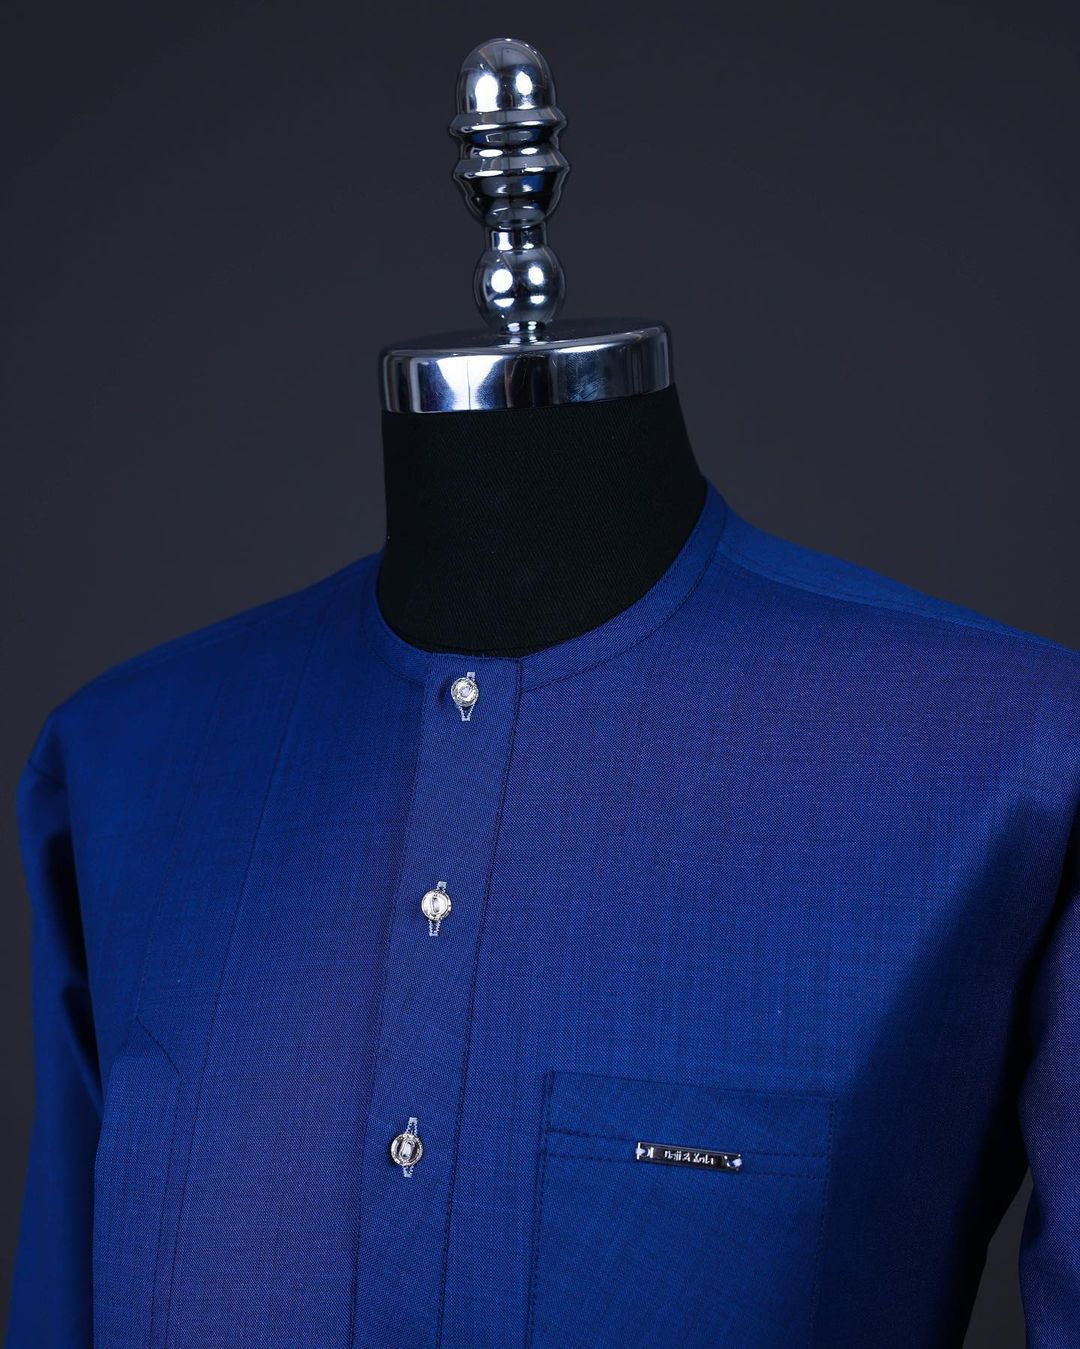 Shop Cobalt blue, front flap with clear view Swarovski details -Deji & Kola